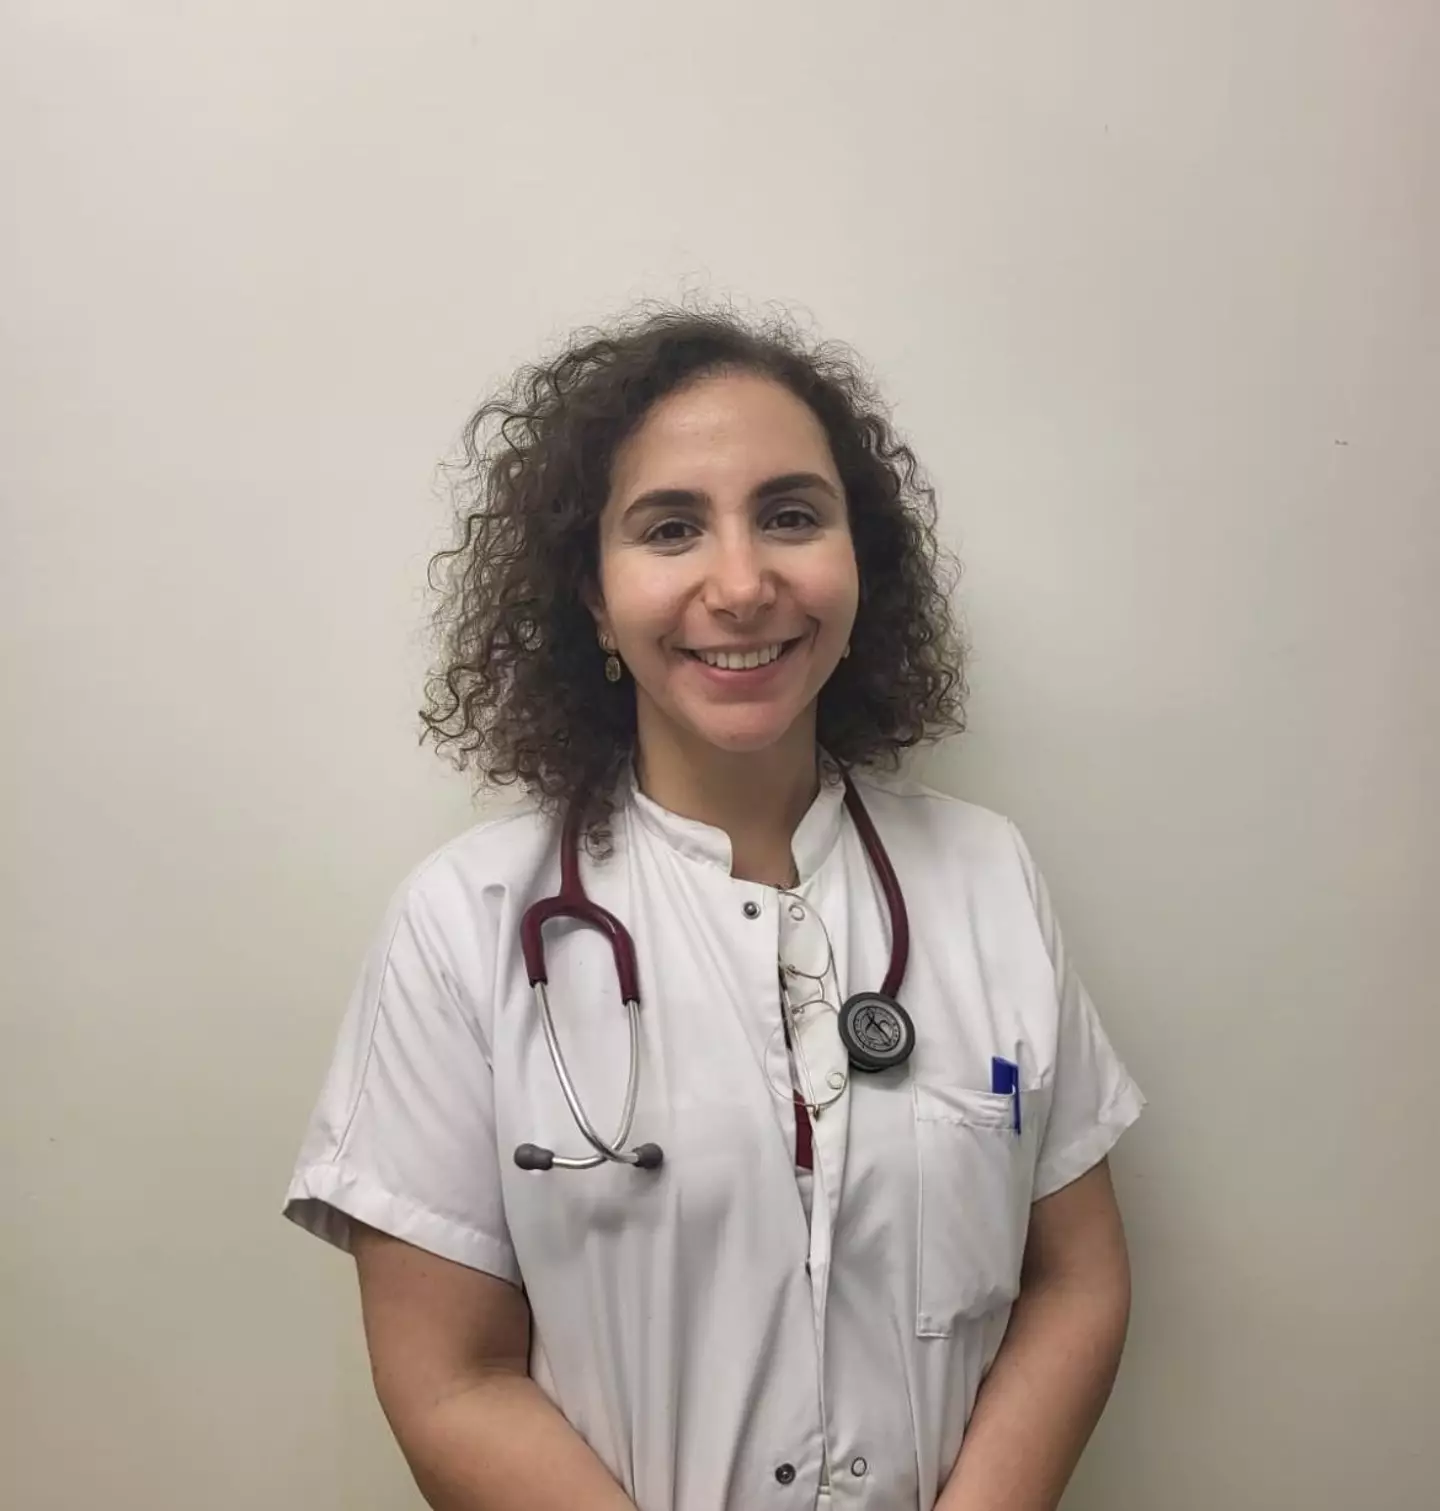 Rita Badaoui now works as a cardiologist in Marseilles. (Rita Badaoui)